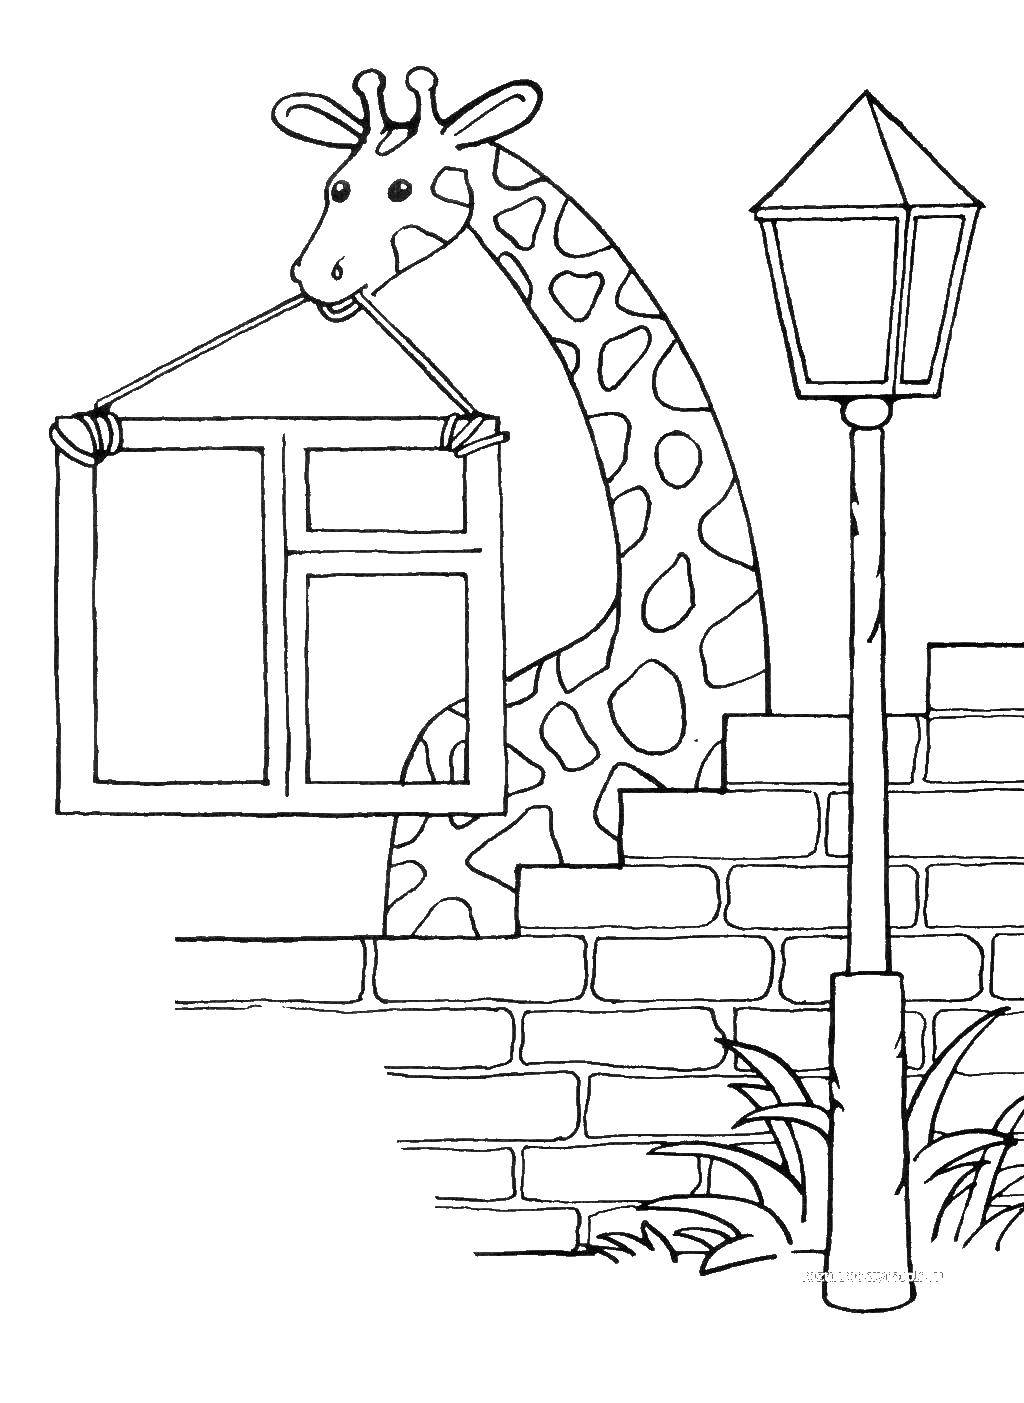 Coloring Giraffe building. Category Animals. Tags:  giraffe, animals.